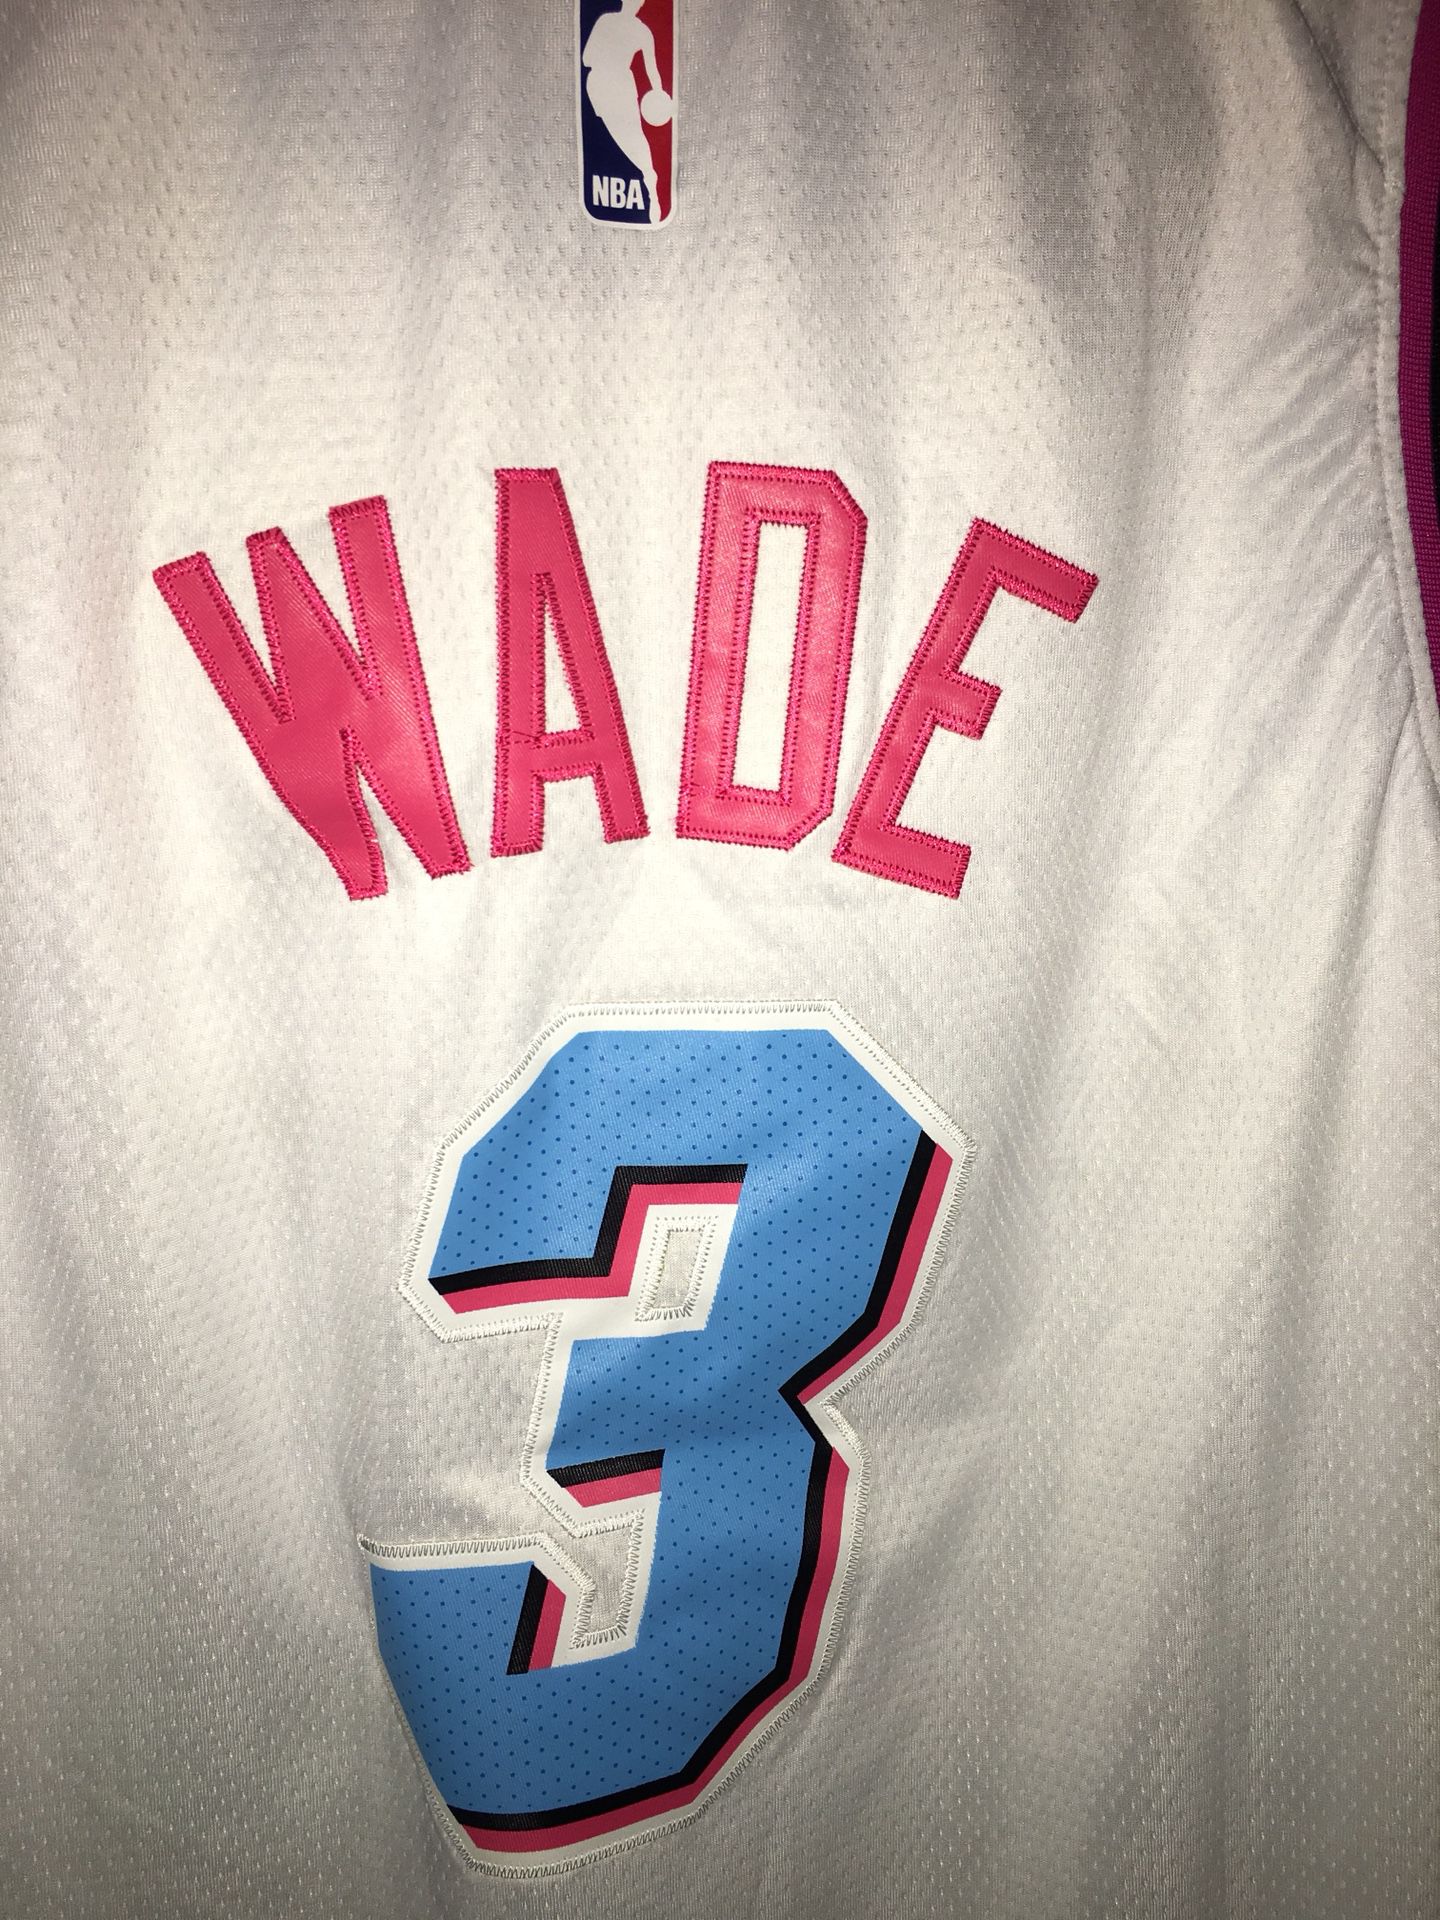 Dwyane Wade Miami Heat Black Vice City Jersey for Sale in Miami, FL -  OfferUp